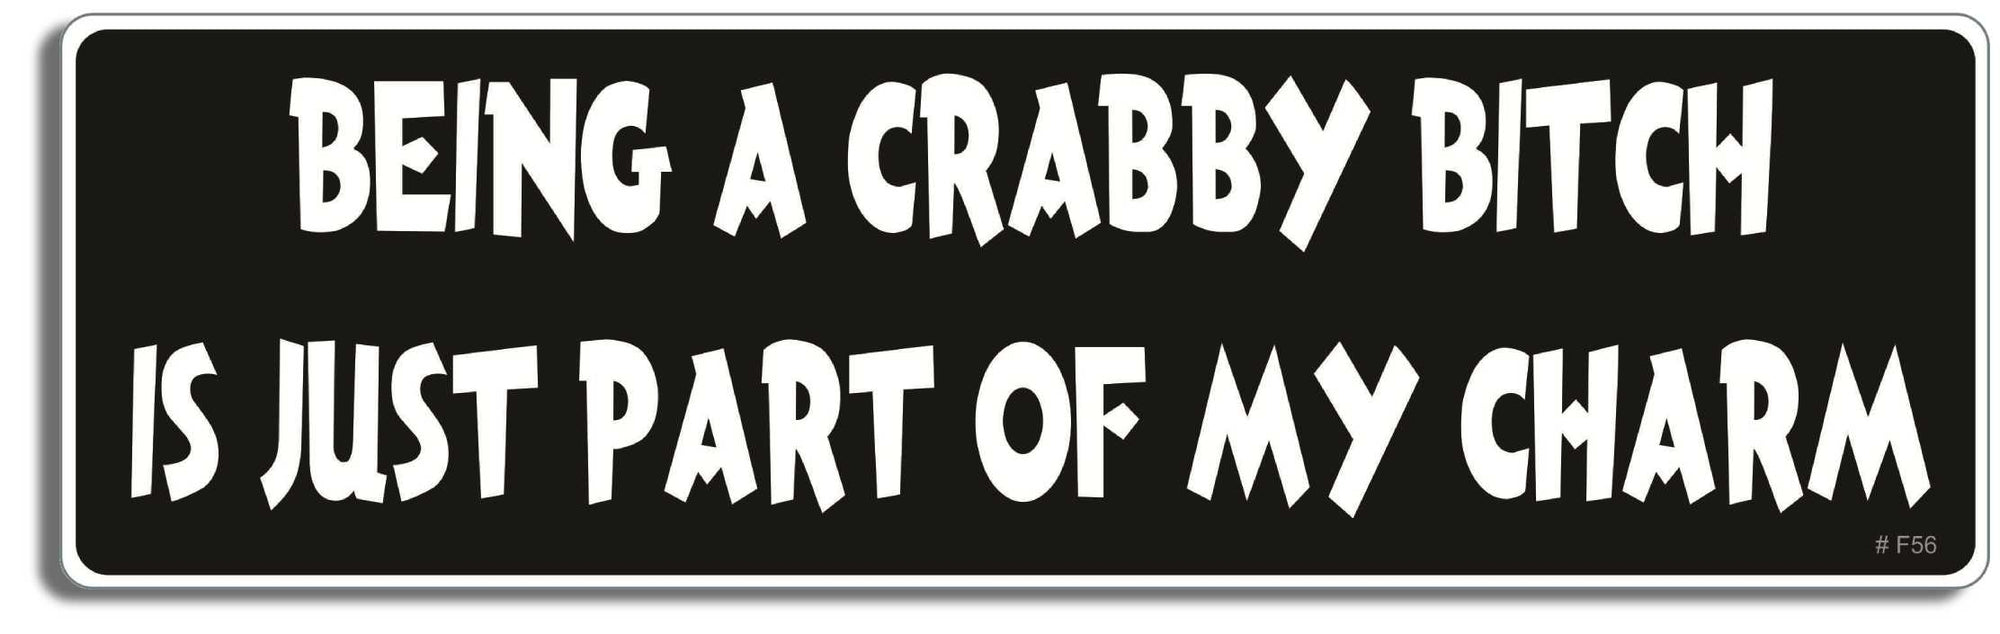 Being a crabby bitch is just part of my charm - 3" x 10" Bumper Sticker--Car Magnet- -  Decal Bumper Sticker-funny Bumper Sticker Car Magnet Being a crabby bitch is just part-  Decal for carsBitchy